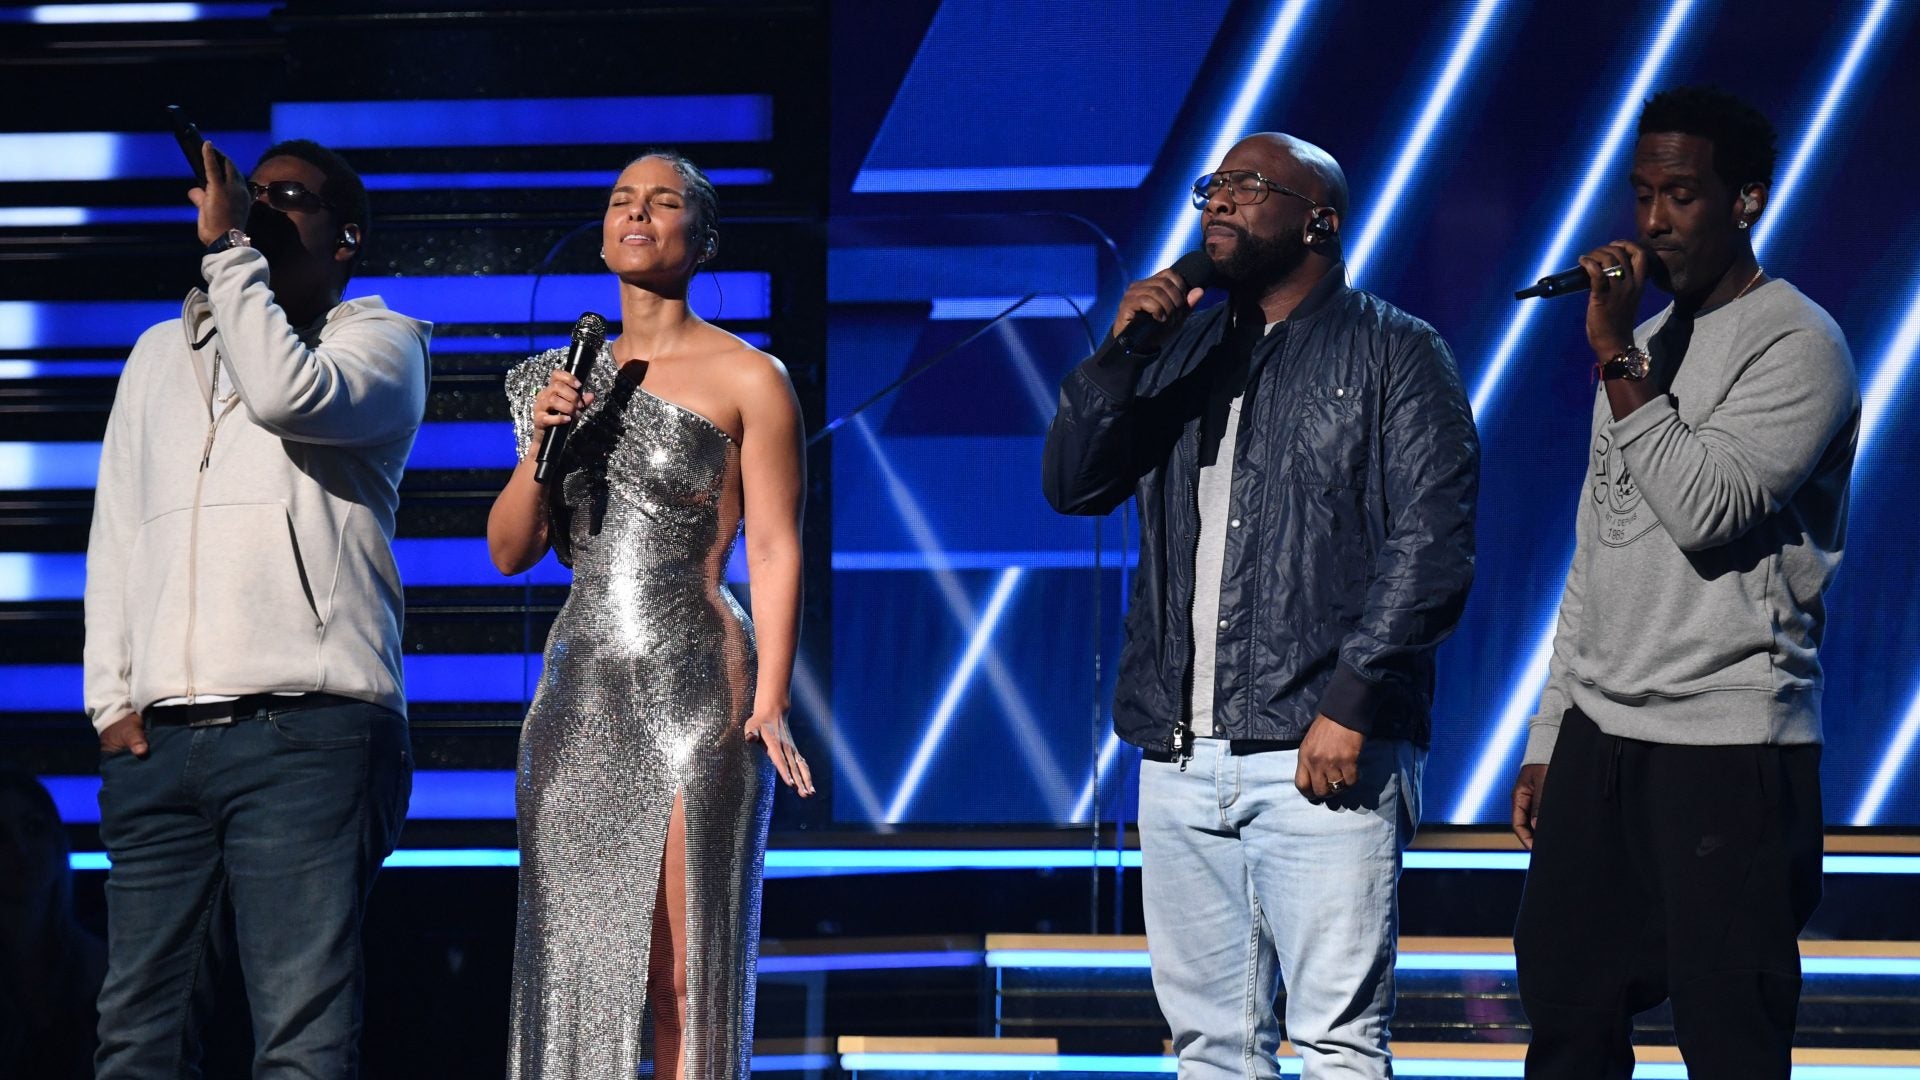 RIP Kobe Bryant: Alicia Keys And Boyz II Men Open Grammy Awards With 'It's So Hard to Say Goodbye'